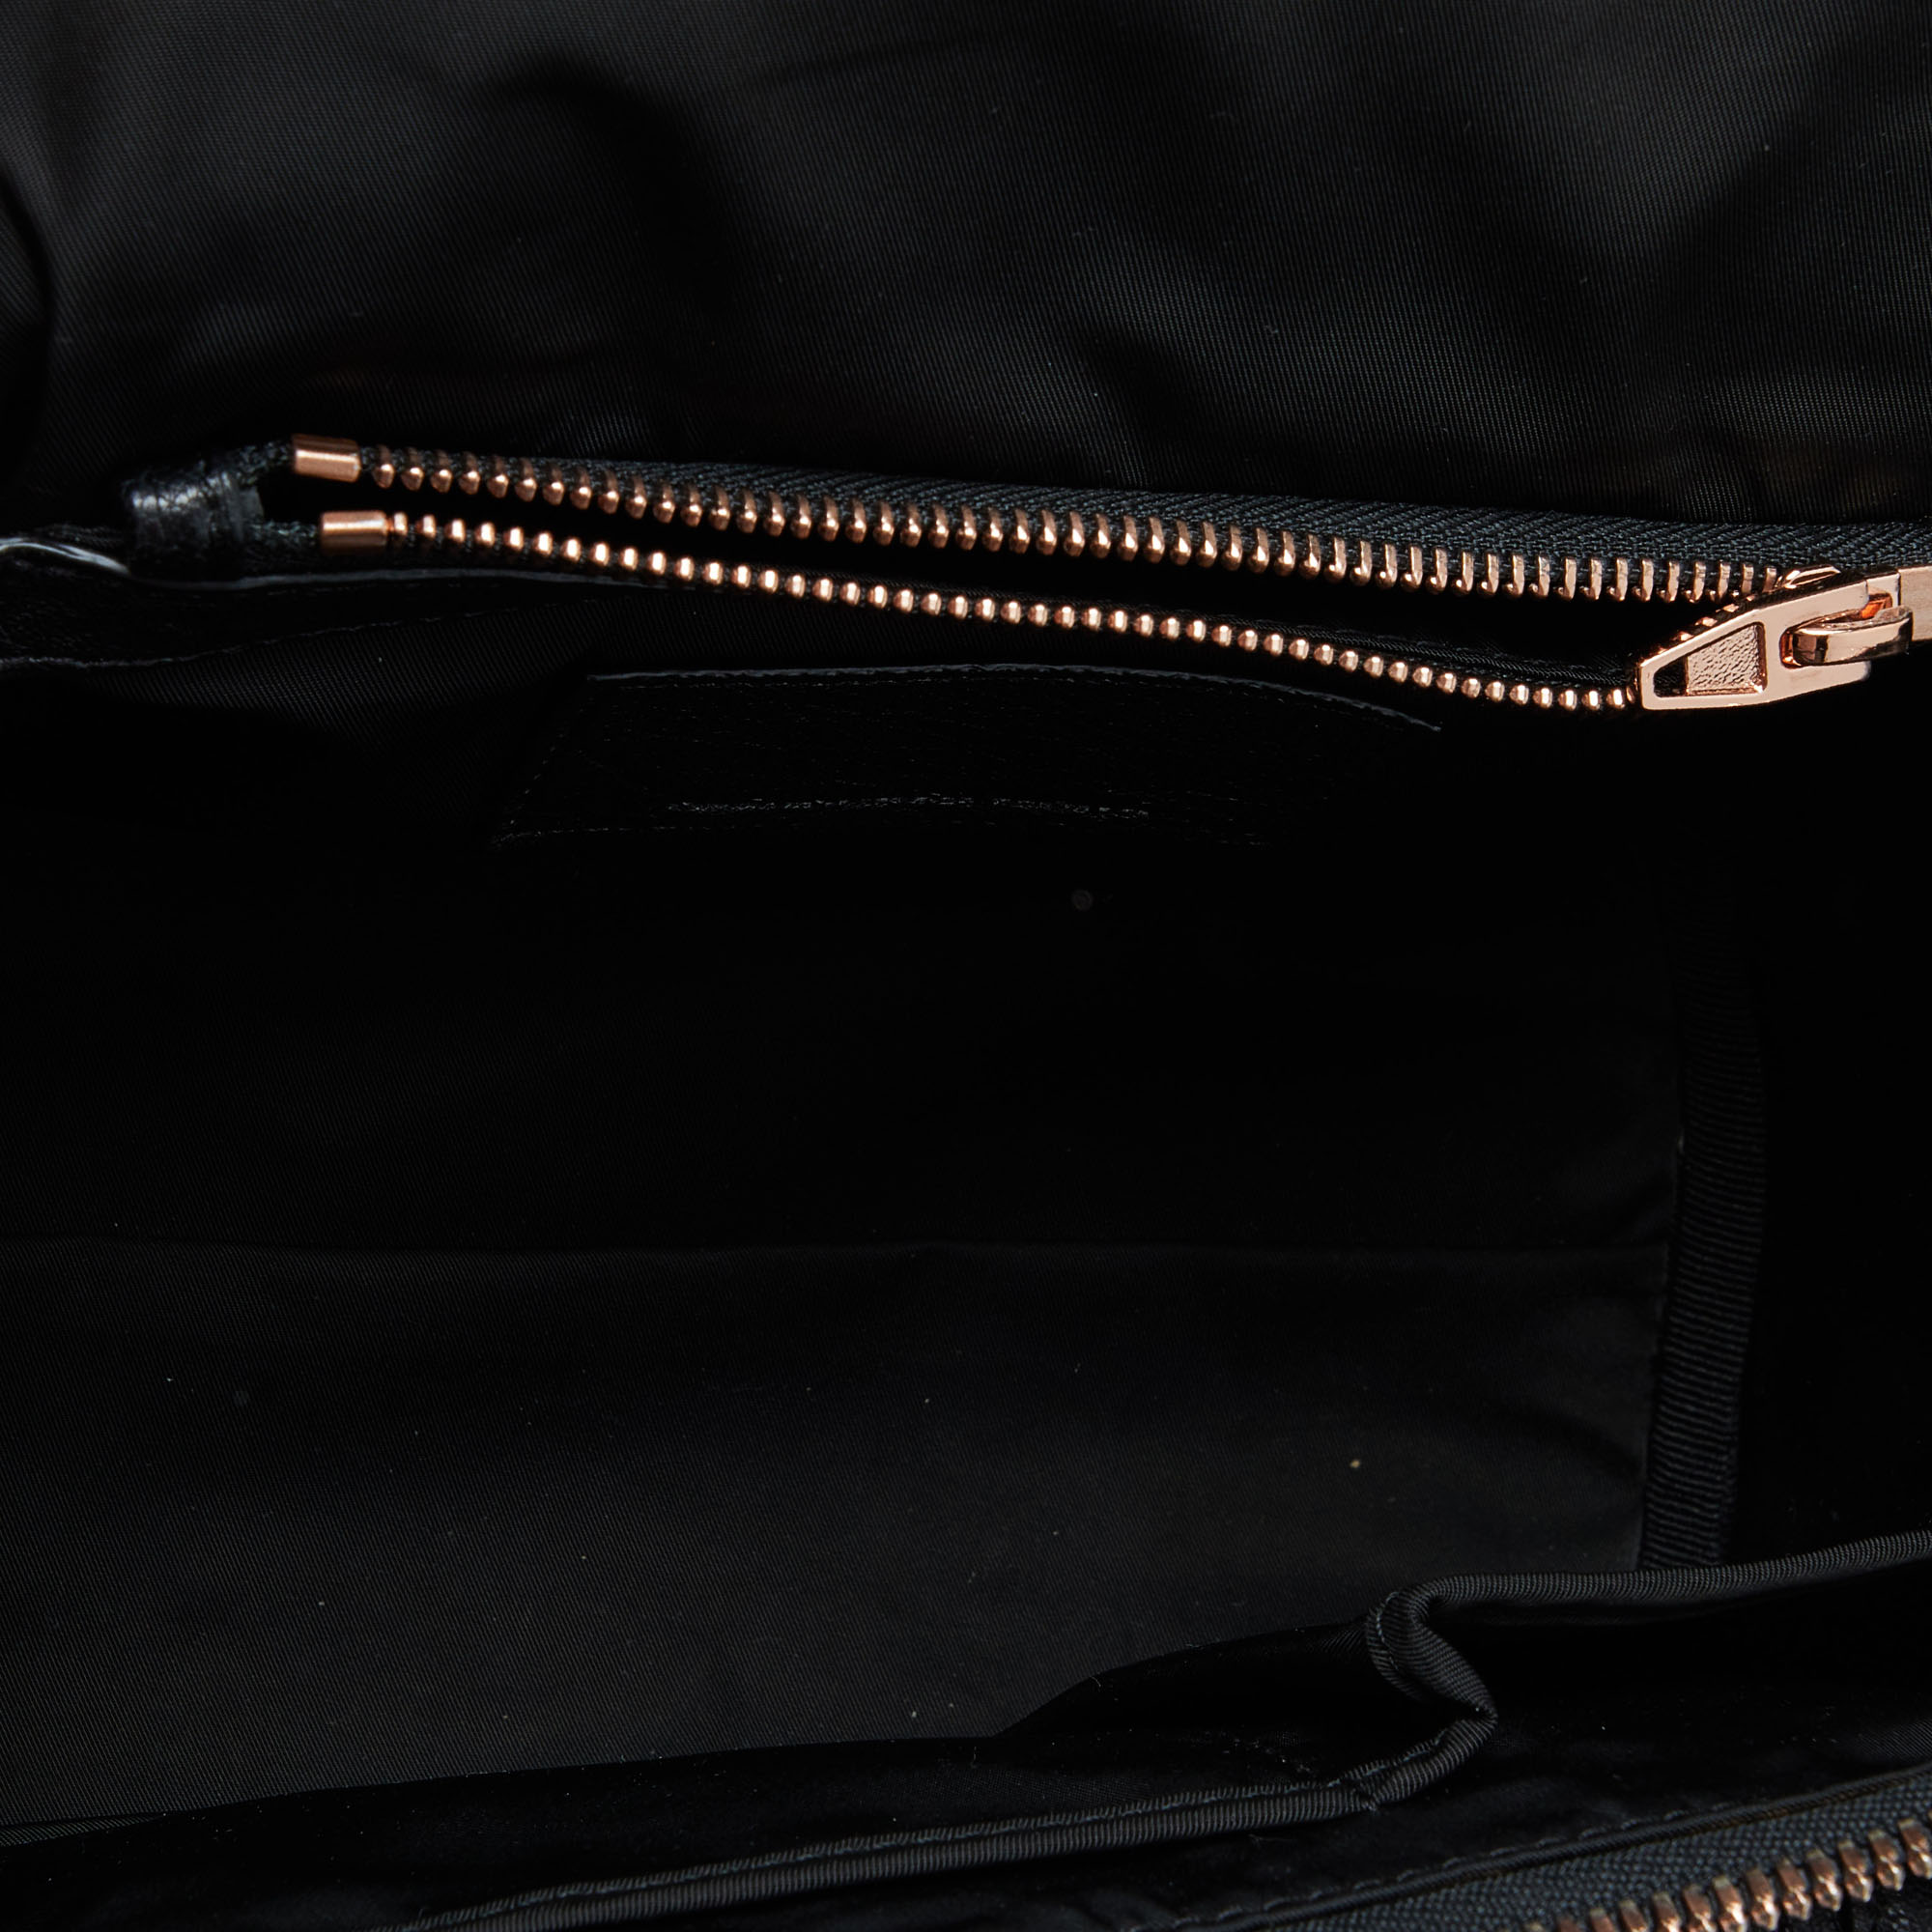 Alexander Wang Black Textured Leather Rocco Bag